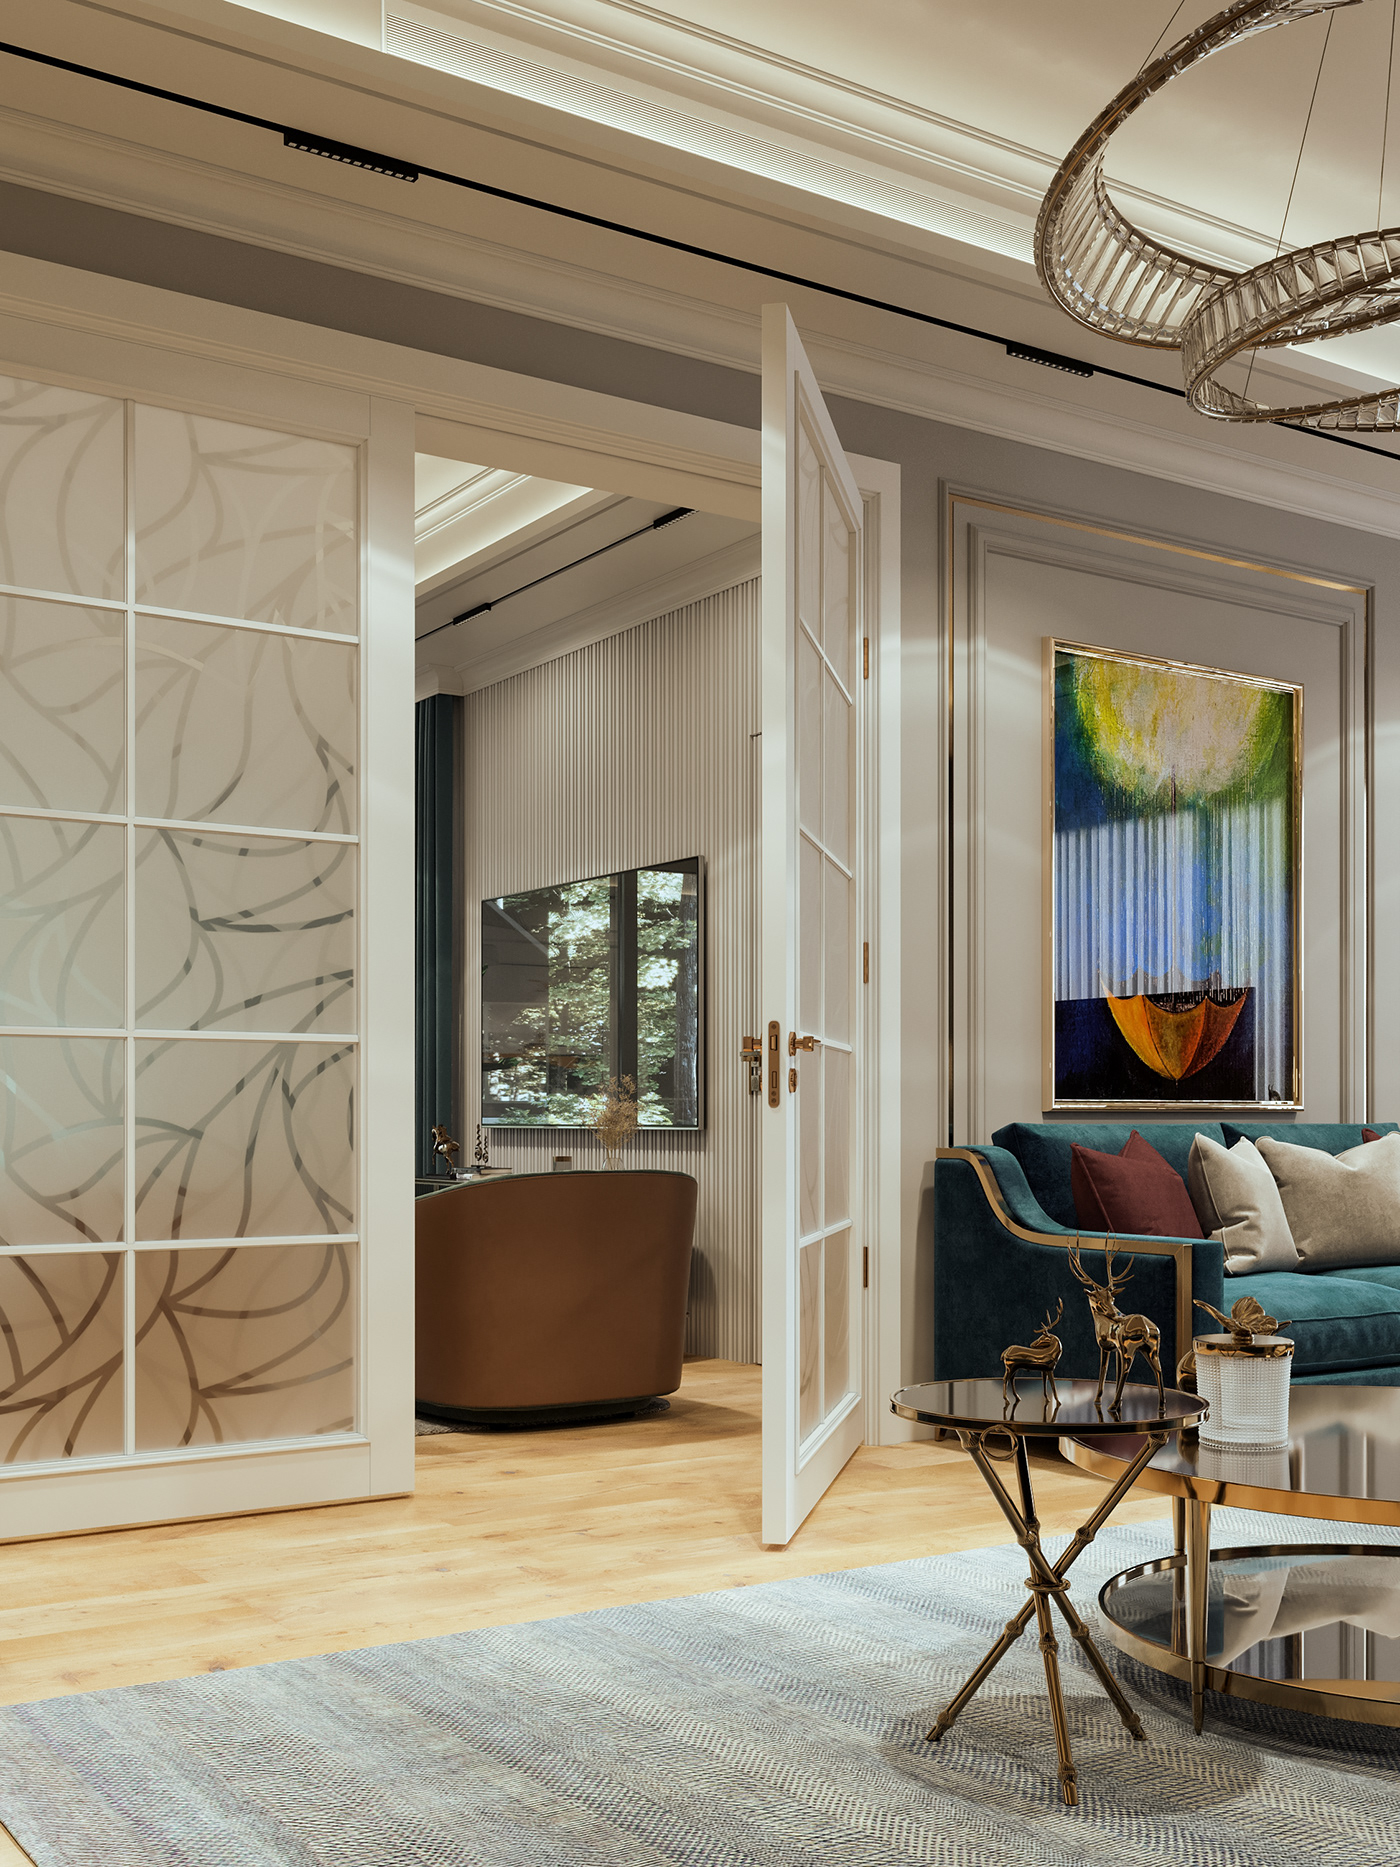 3ds max architecture corona render  kichen livingroom Luxurious Villa luxury Receotion simple Villa